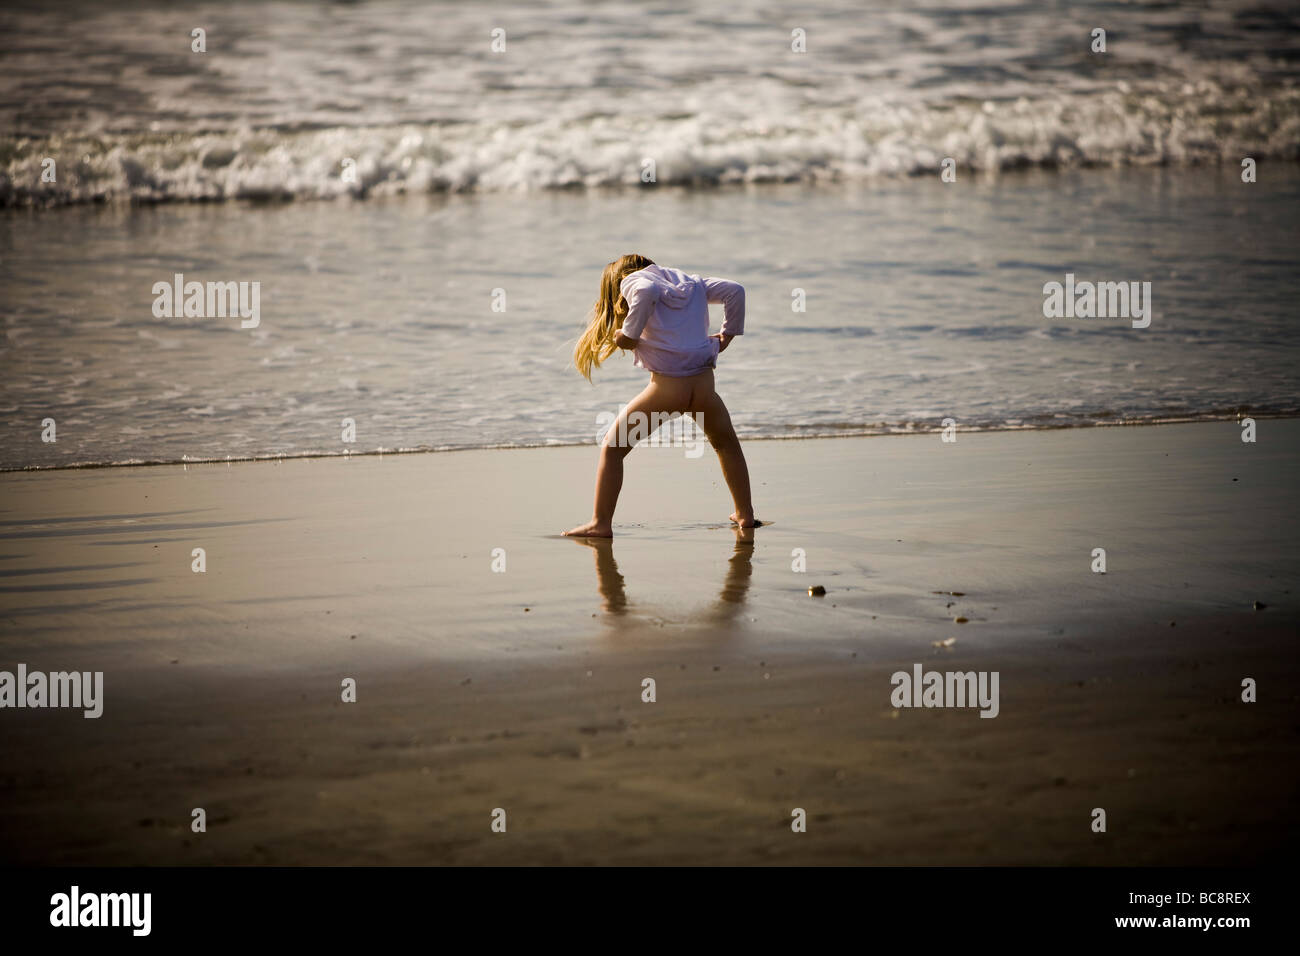 A Young Girl Goes To The Bathroom On The Beach Venice Beach Daftsex Hd 